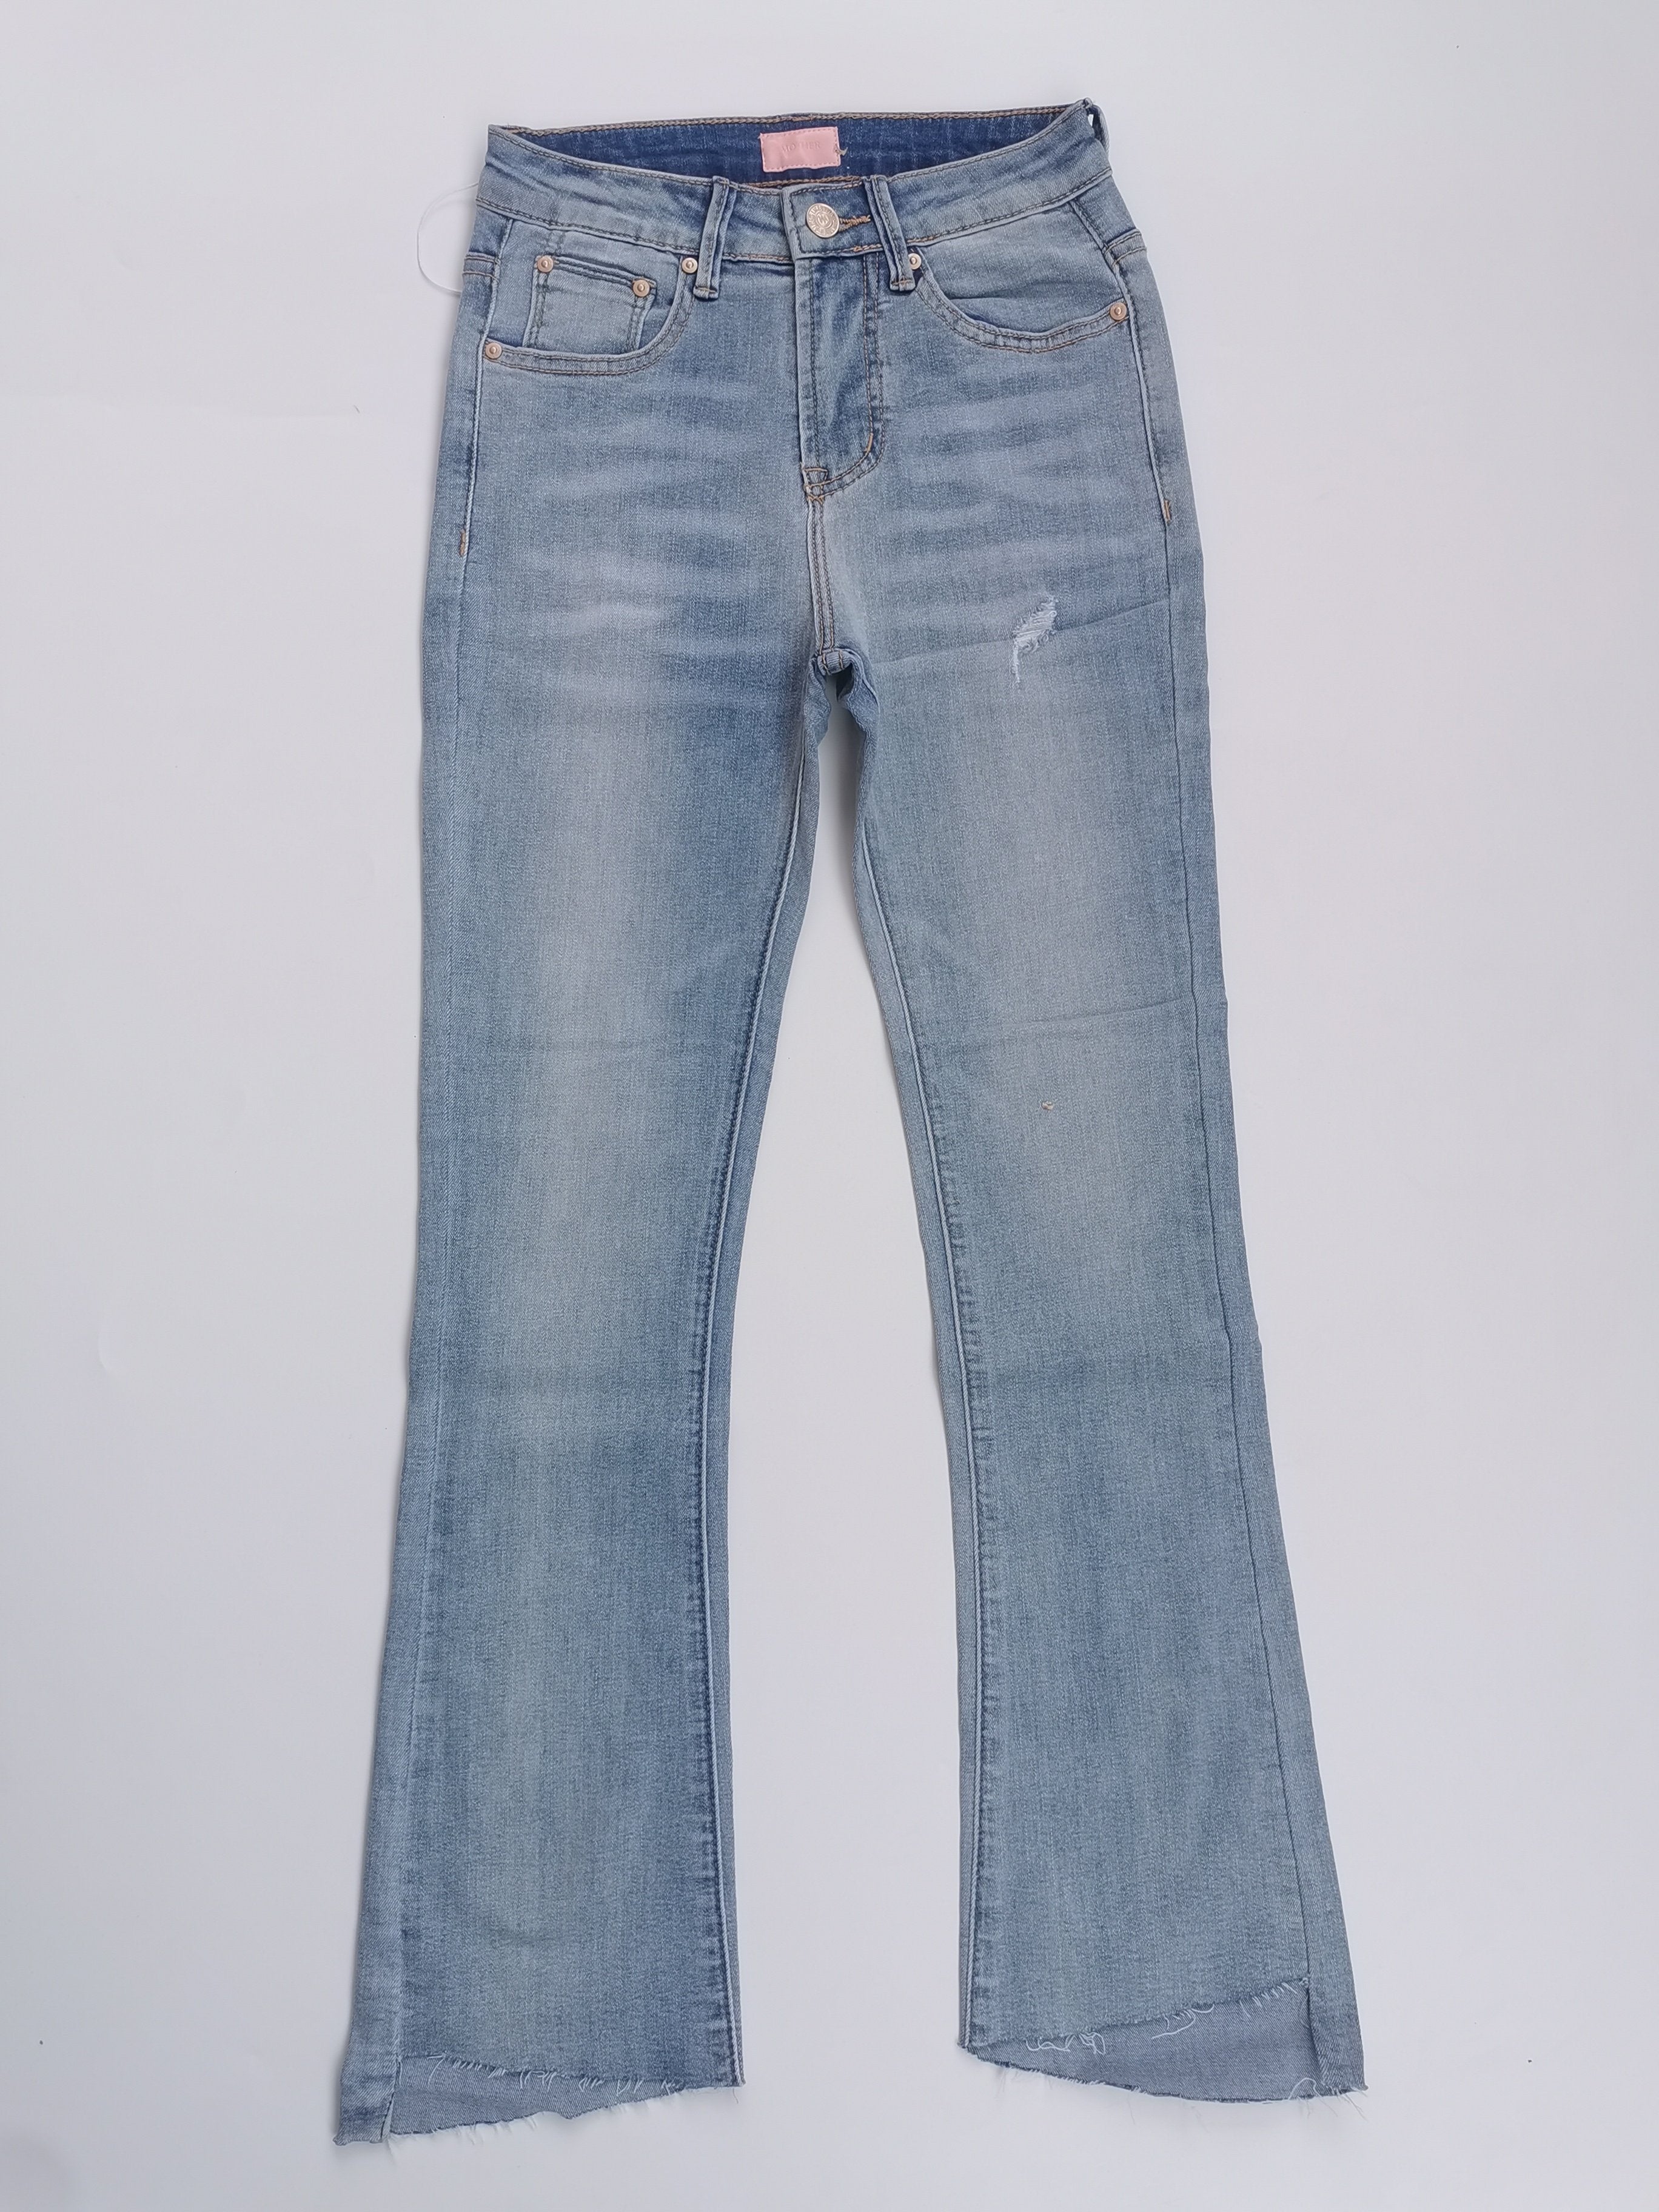 Women casual jeans fashion all match denim pants-WF00406-Veeddydropshipping